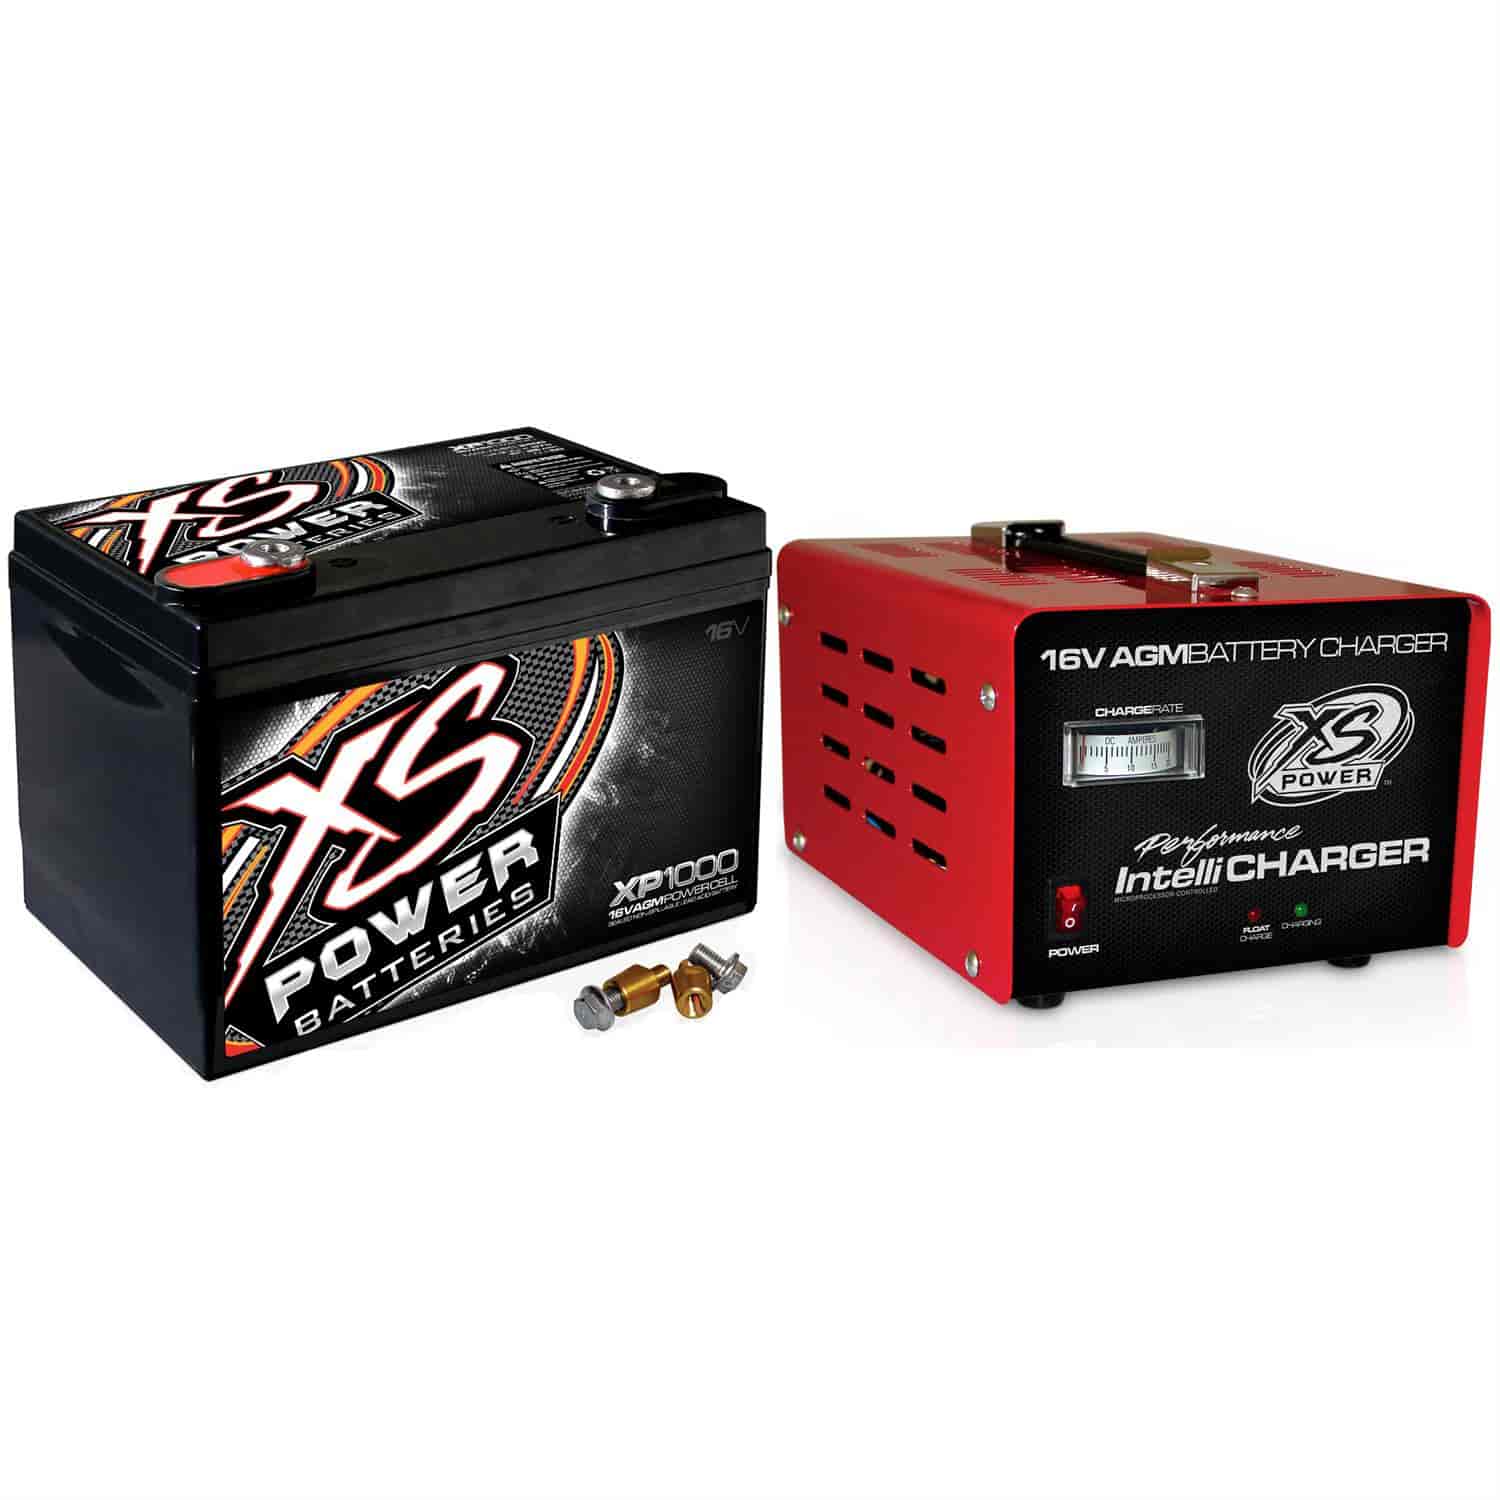 Xs Power Battery XP1000CK2 AGM Battery 16V 2 Post